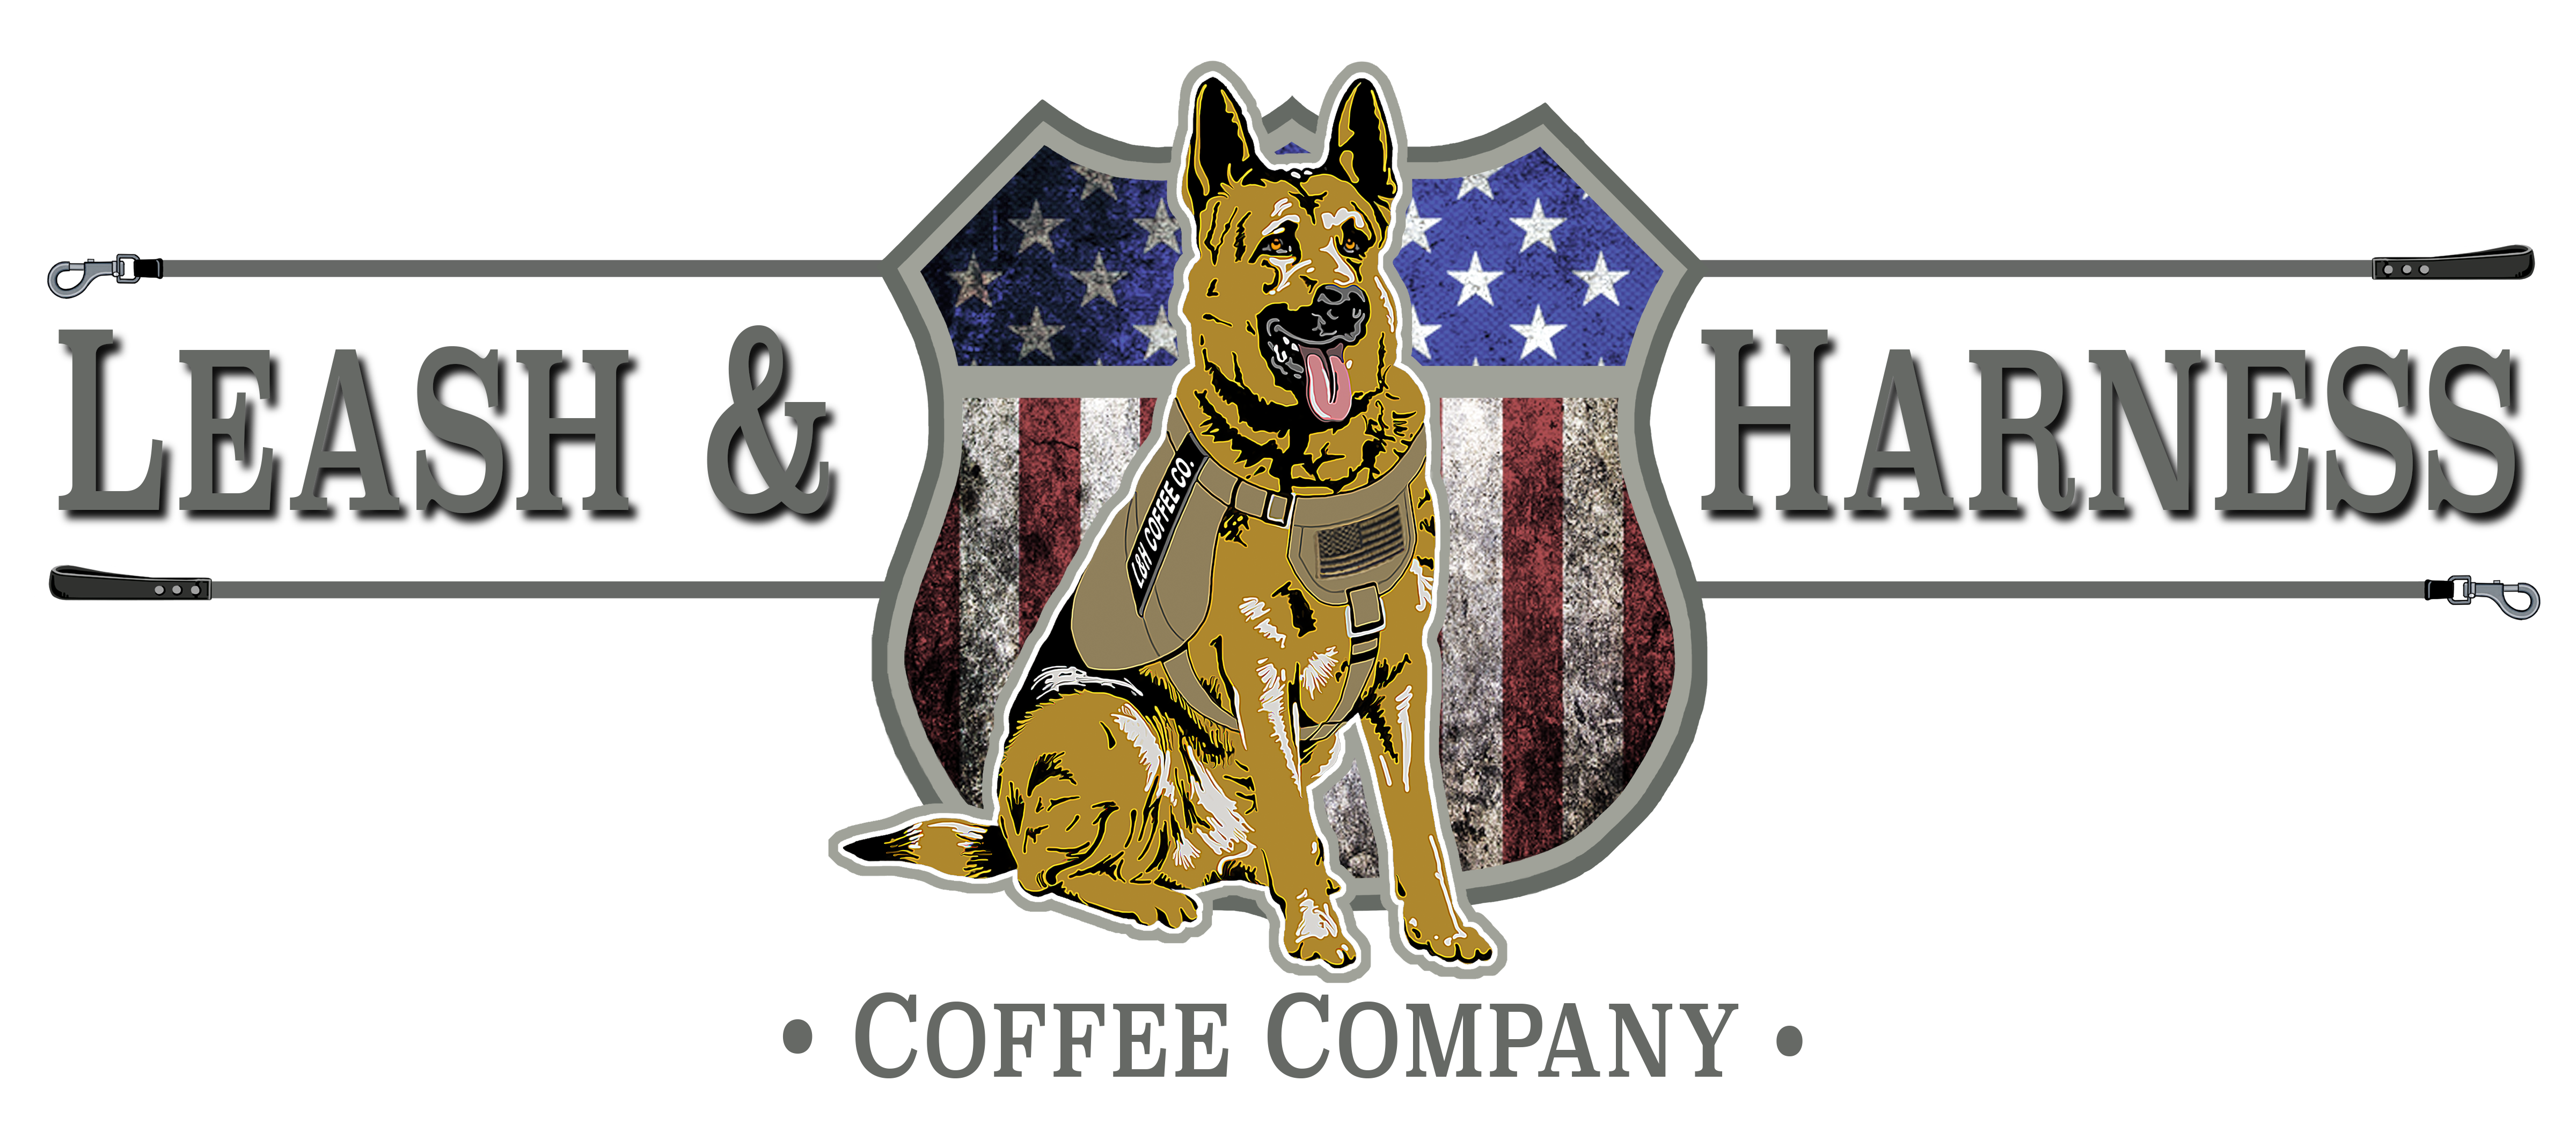 Leash & Harness Coffee Company